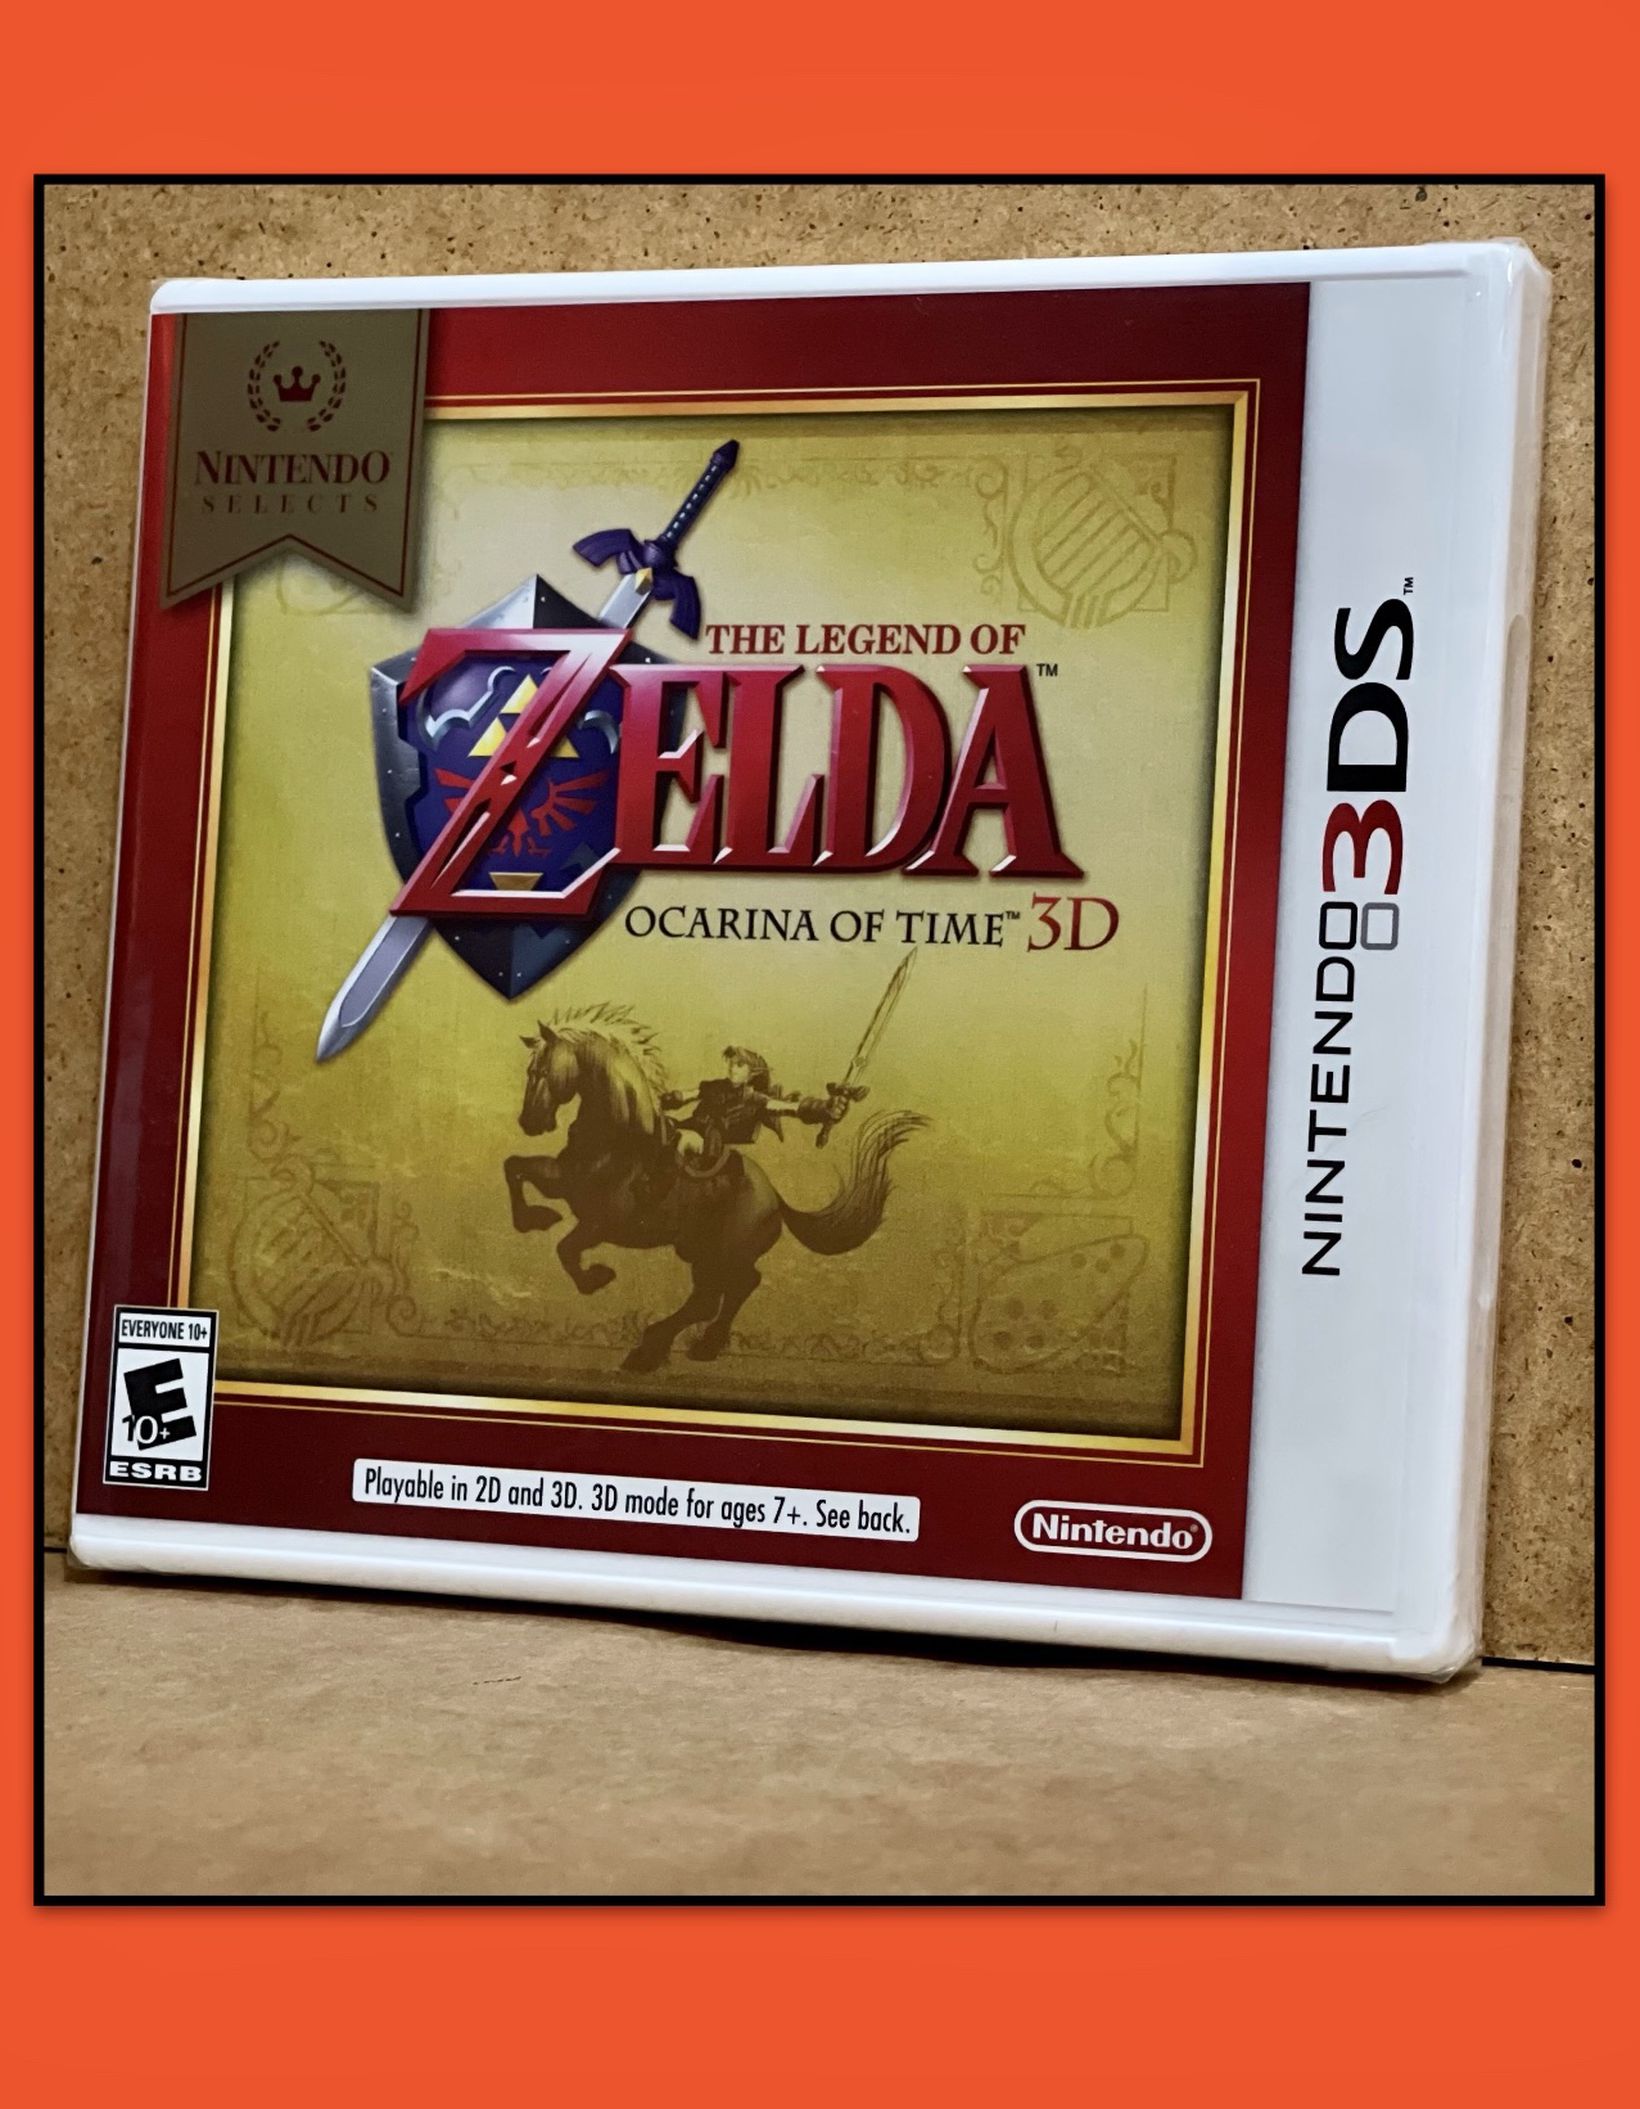 The Legend Of Zelda Ocarina Of Time 3D 👉 “New” Nintendo 3DS